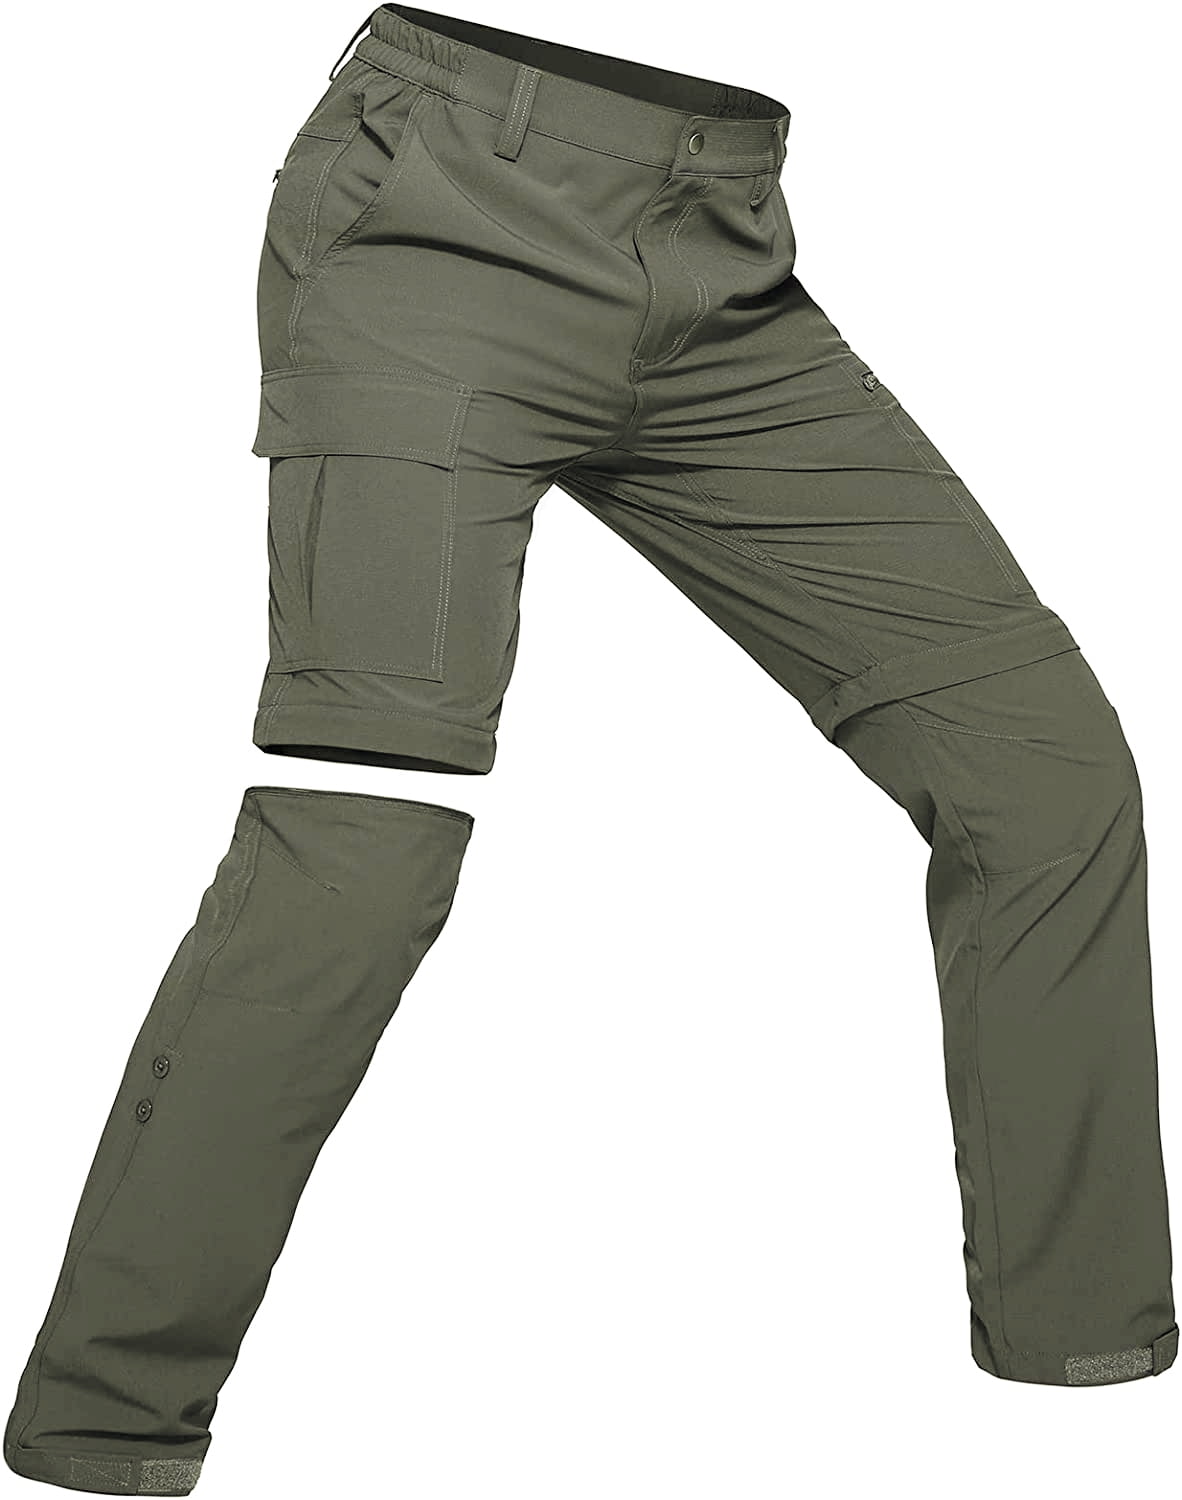 Hiauspor Hiking Cargo Pants for Men Convertible Zip Off with 5 Deep Pockets  Elastic Waist Khaki L 